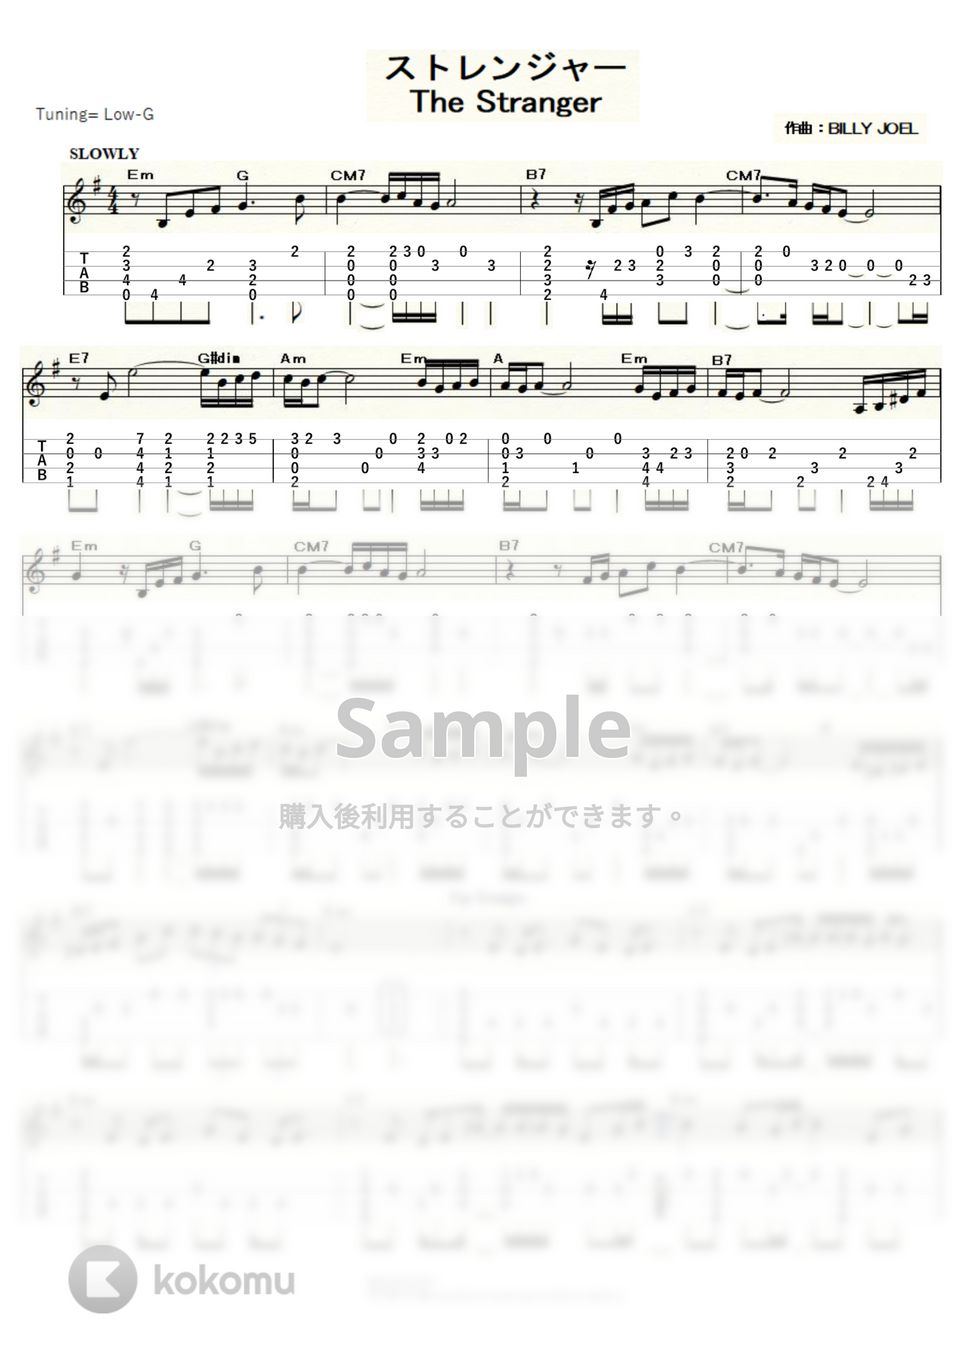 Billy Joel - The Stranger (ｳｸﾚﾚｿﾛ / Low-G / 中級～上級) by ukulelepapa